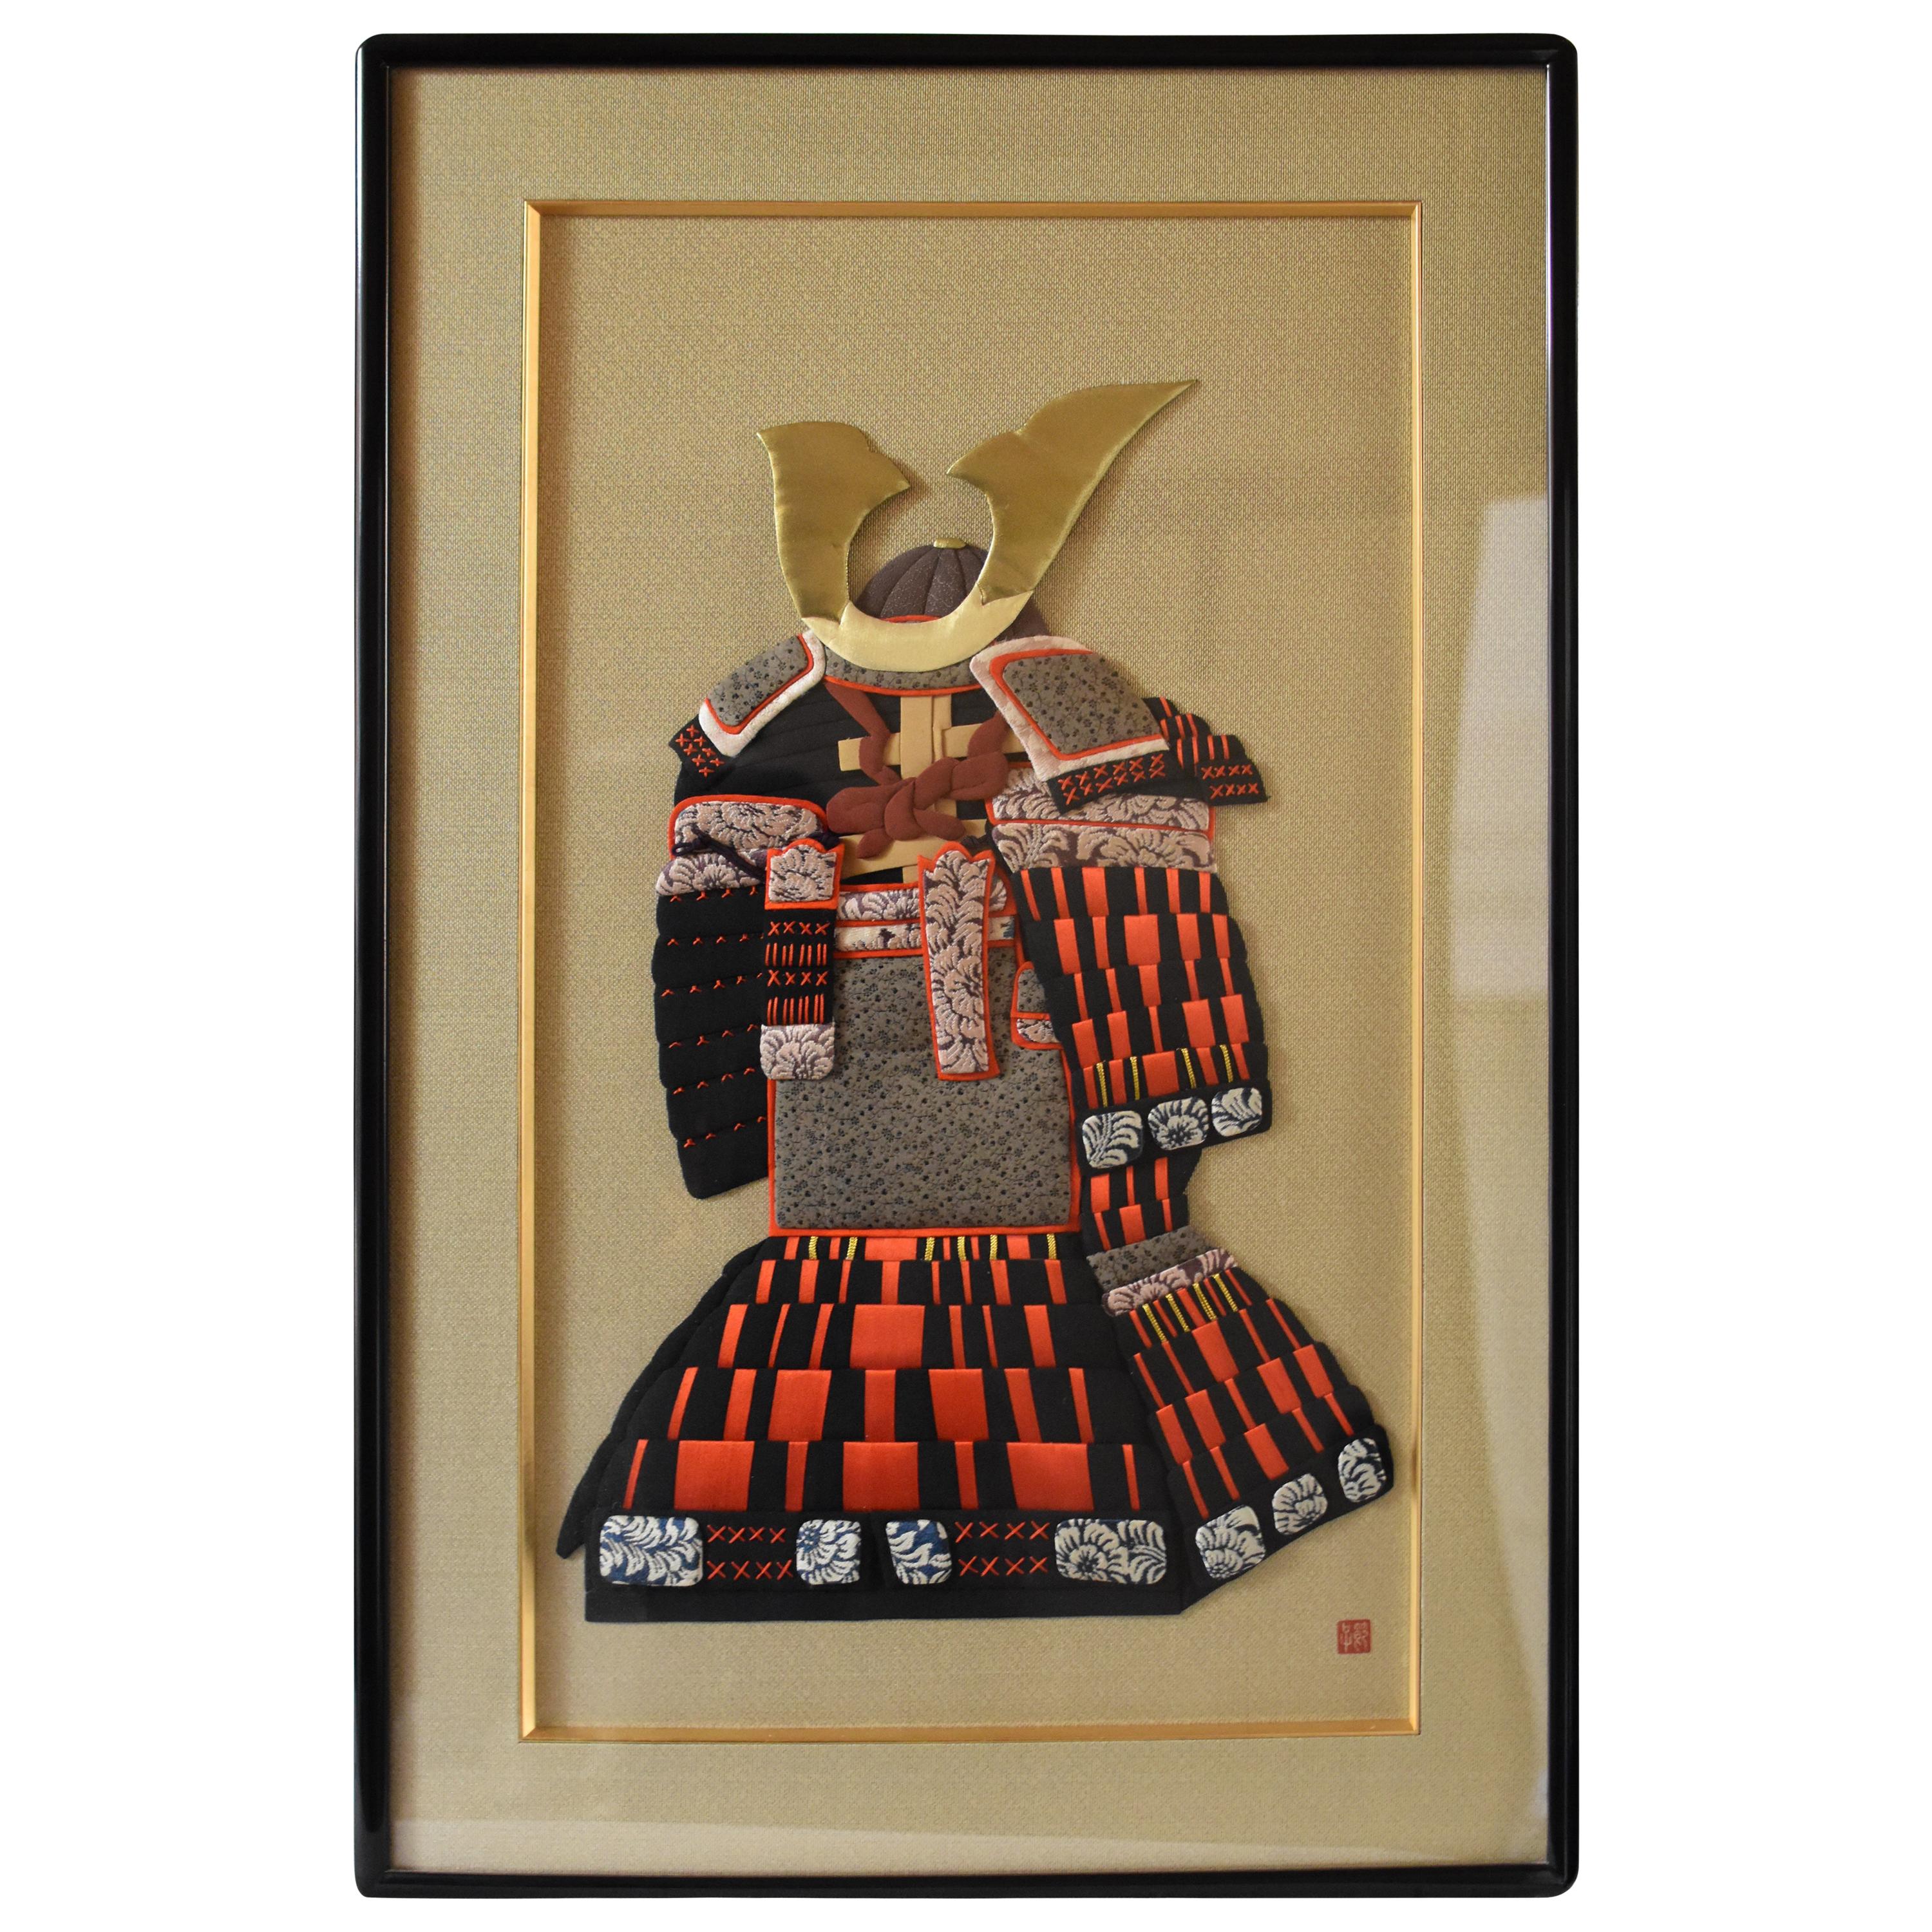 Handgefertigte japanische schwarz-rote-goldene Brokat-Wandschmuckkunst aus Seide